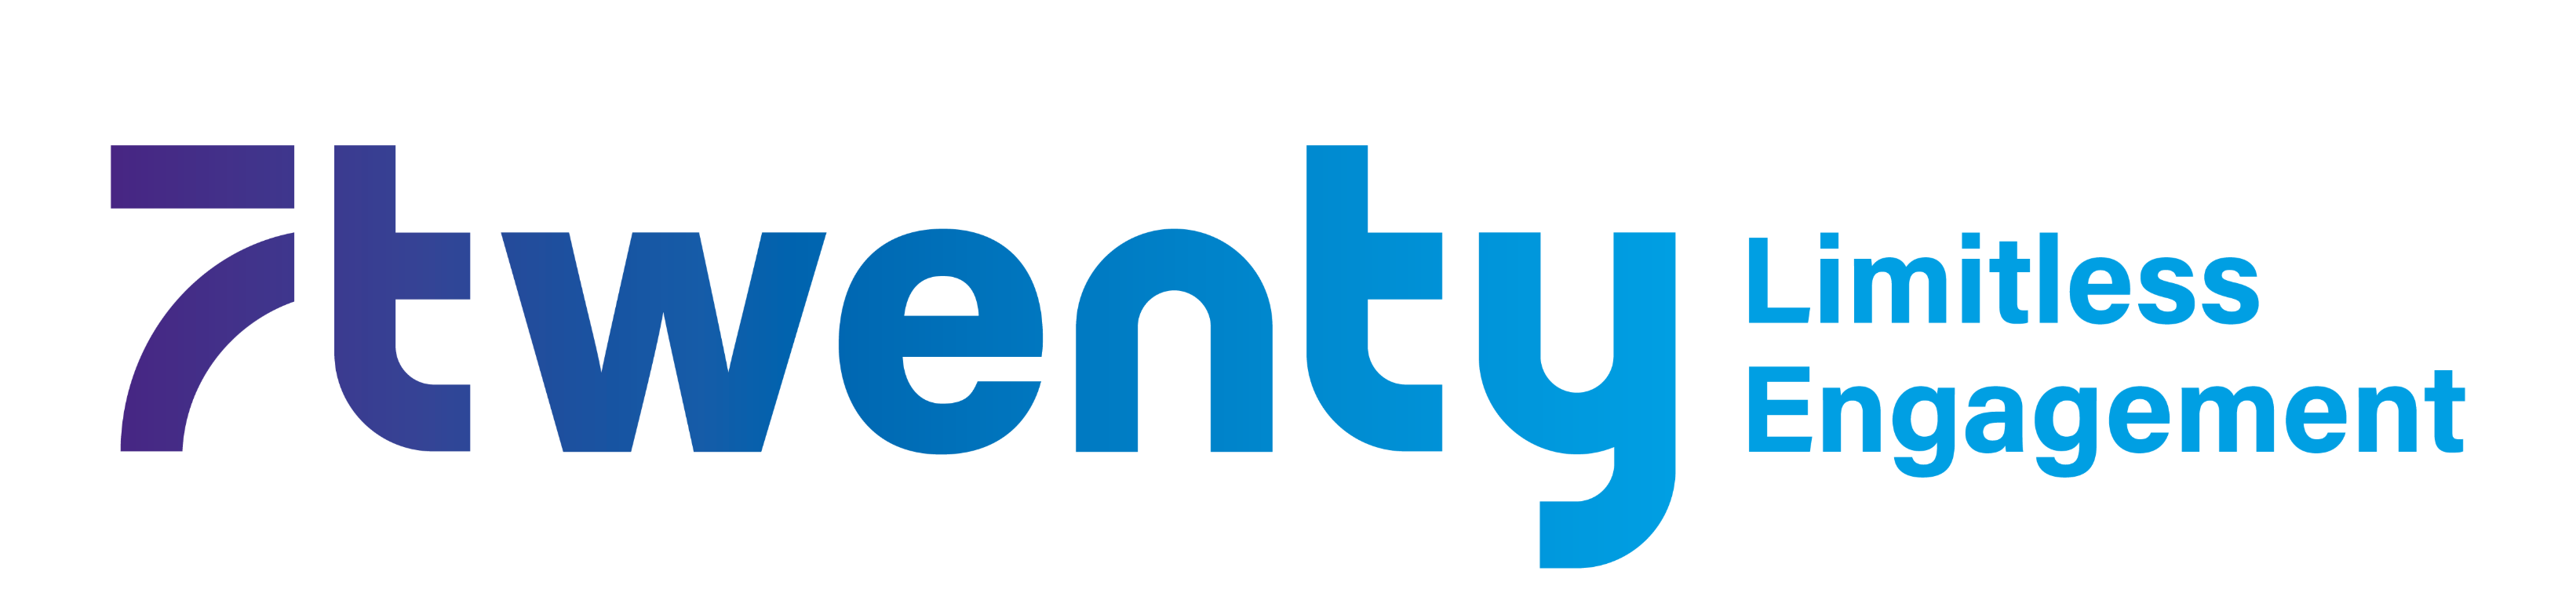 7twenty logo